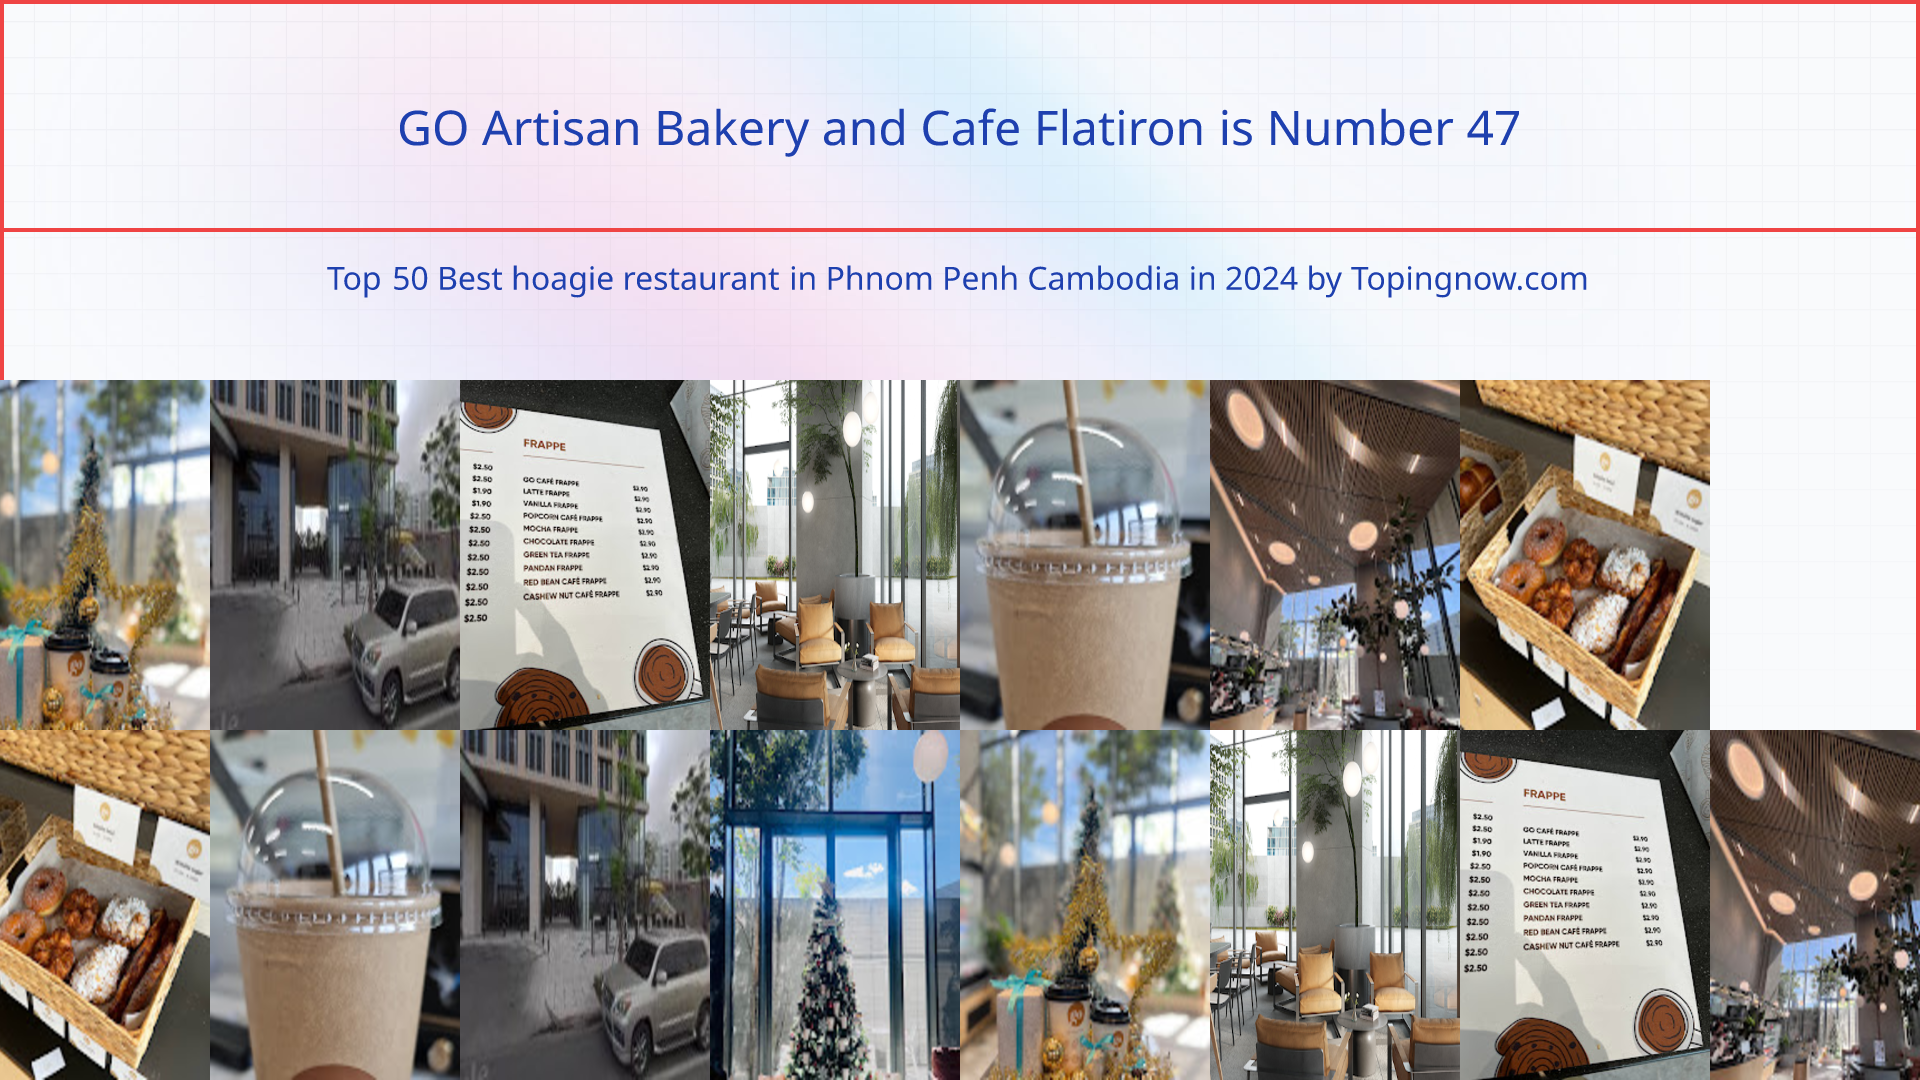 GO Artisan Bakery and Cafe Flatiron: Top 50 Best hoagie restaurant in Phnom Penh Cambodia in 2024